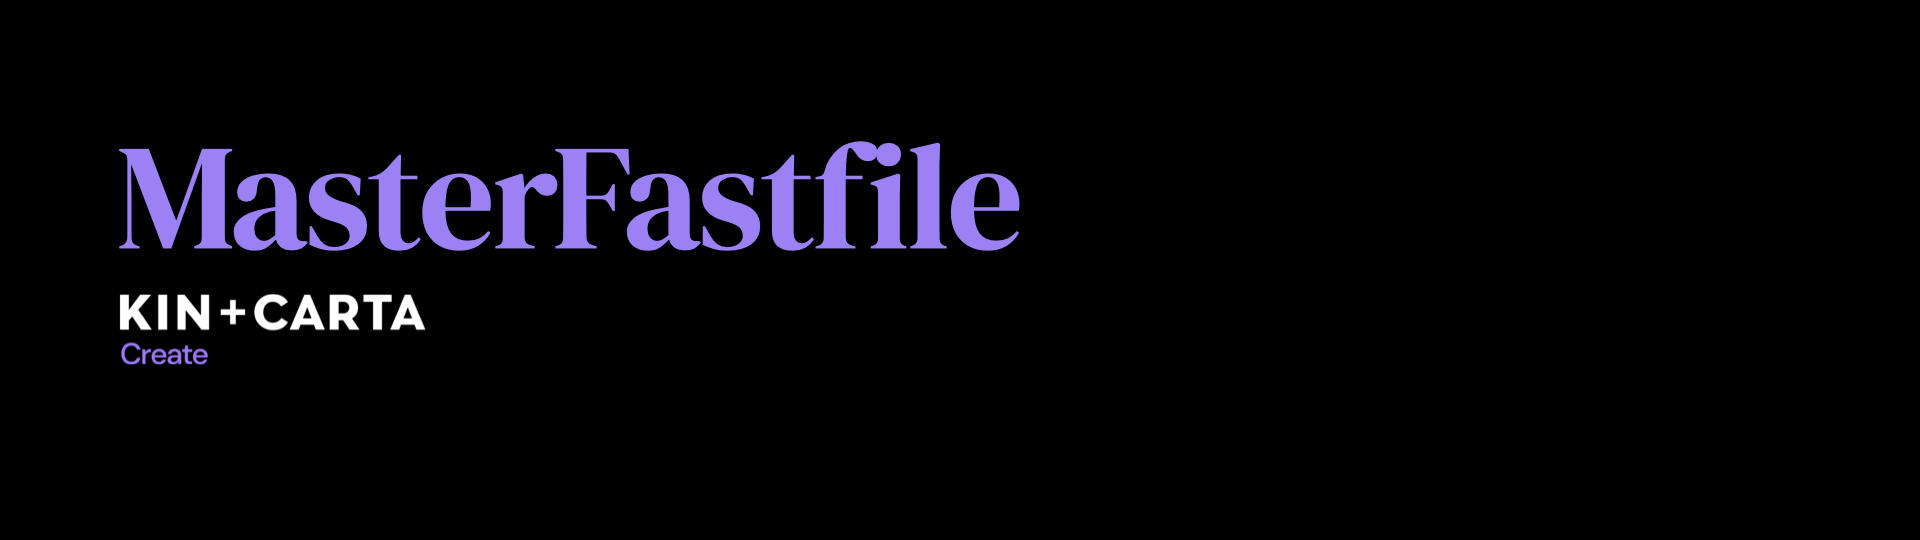 MasterFastfile - Kin + Carta Create